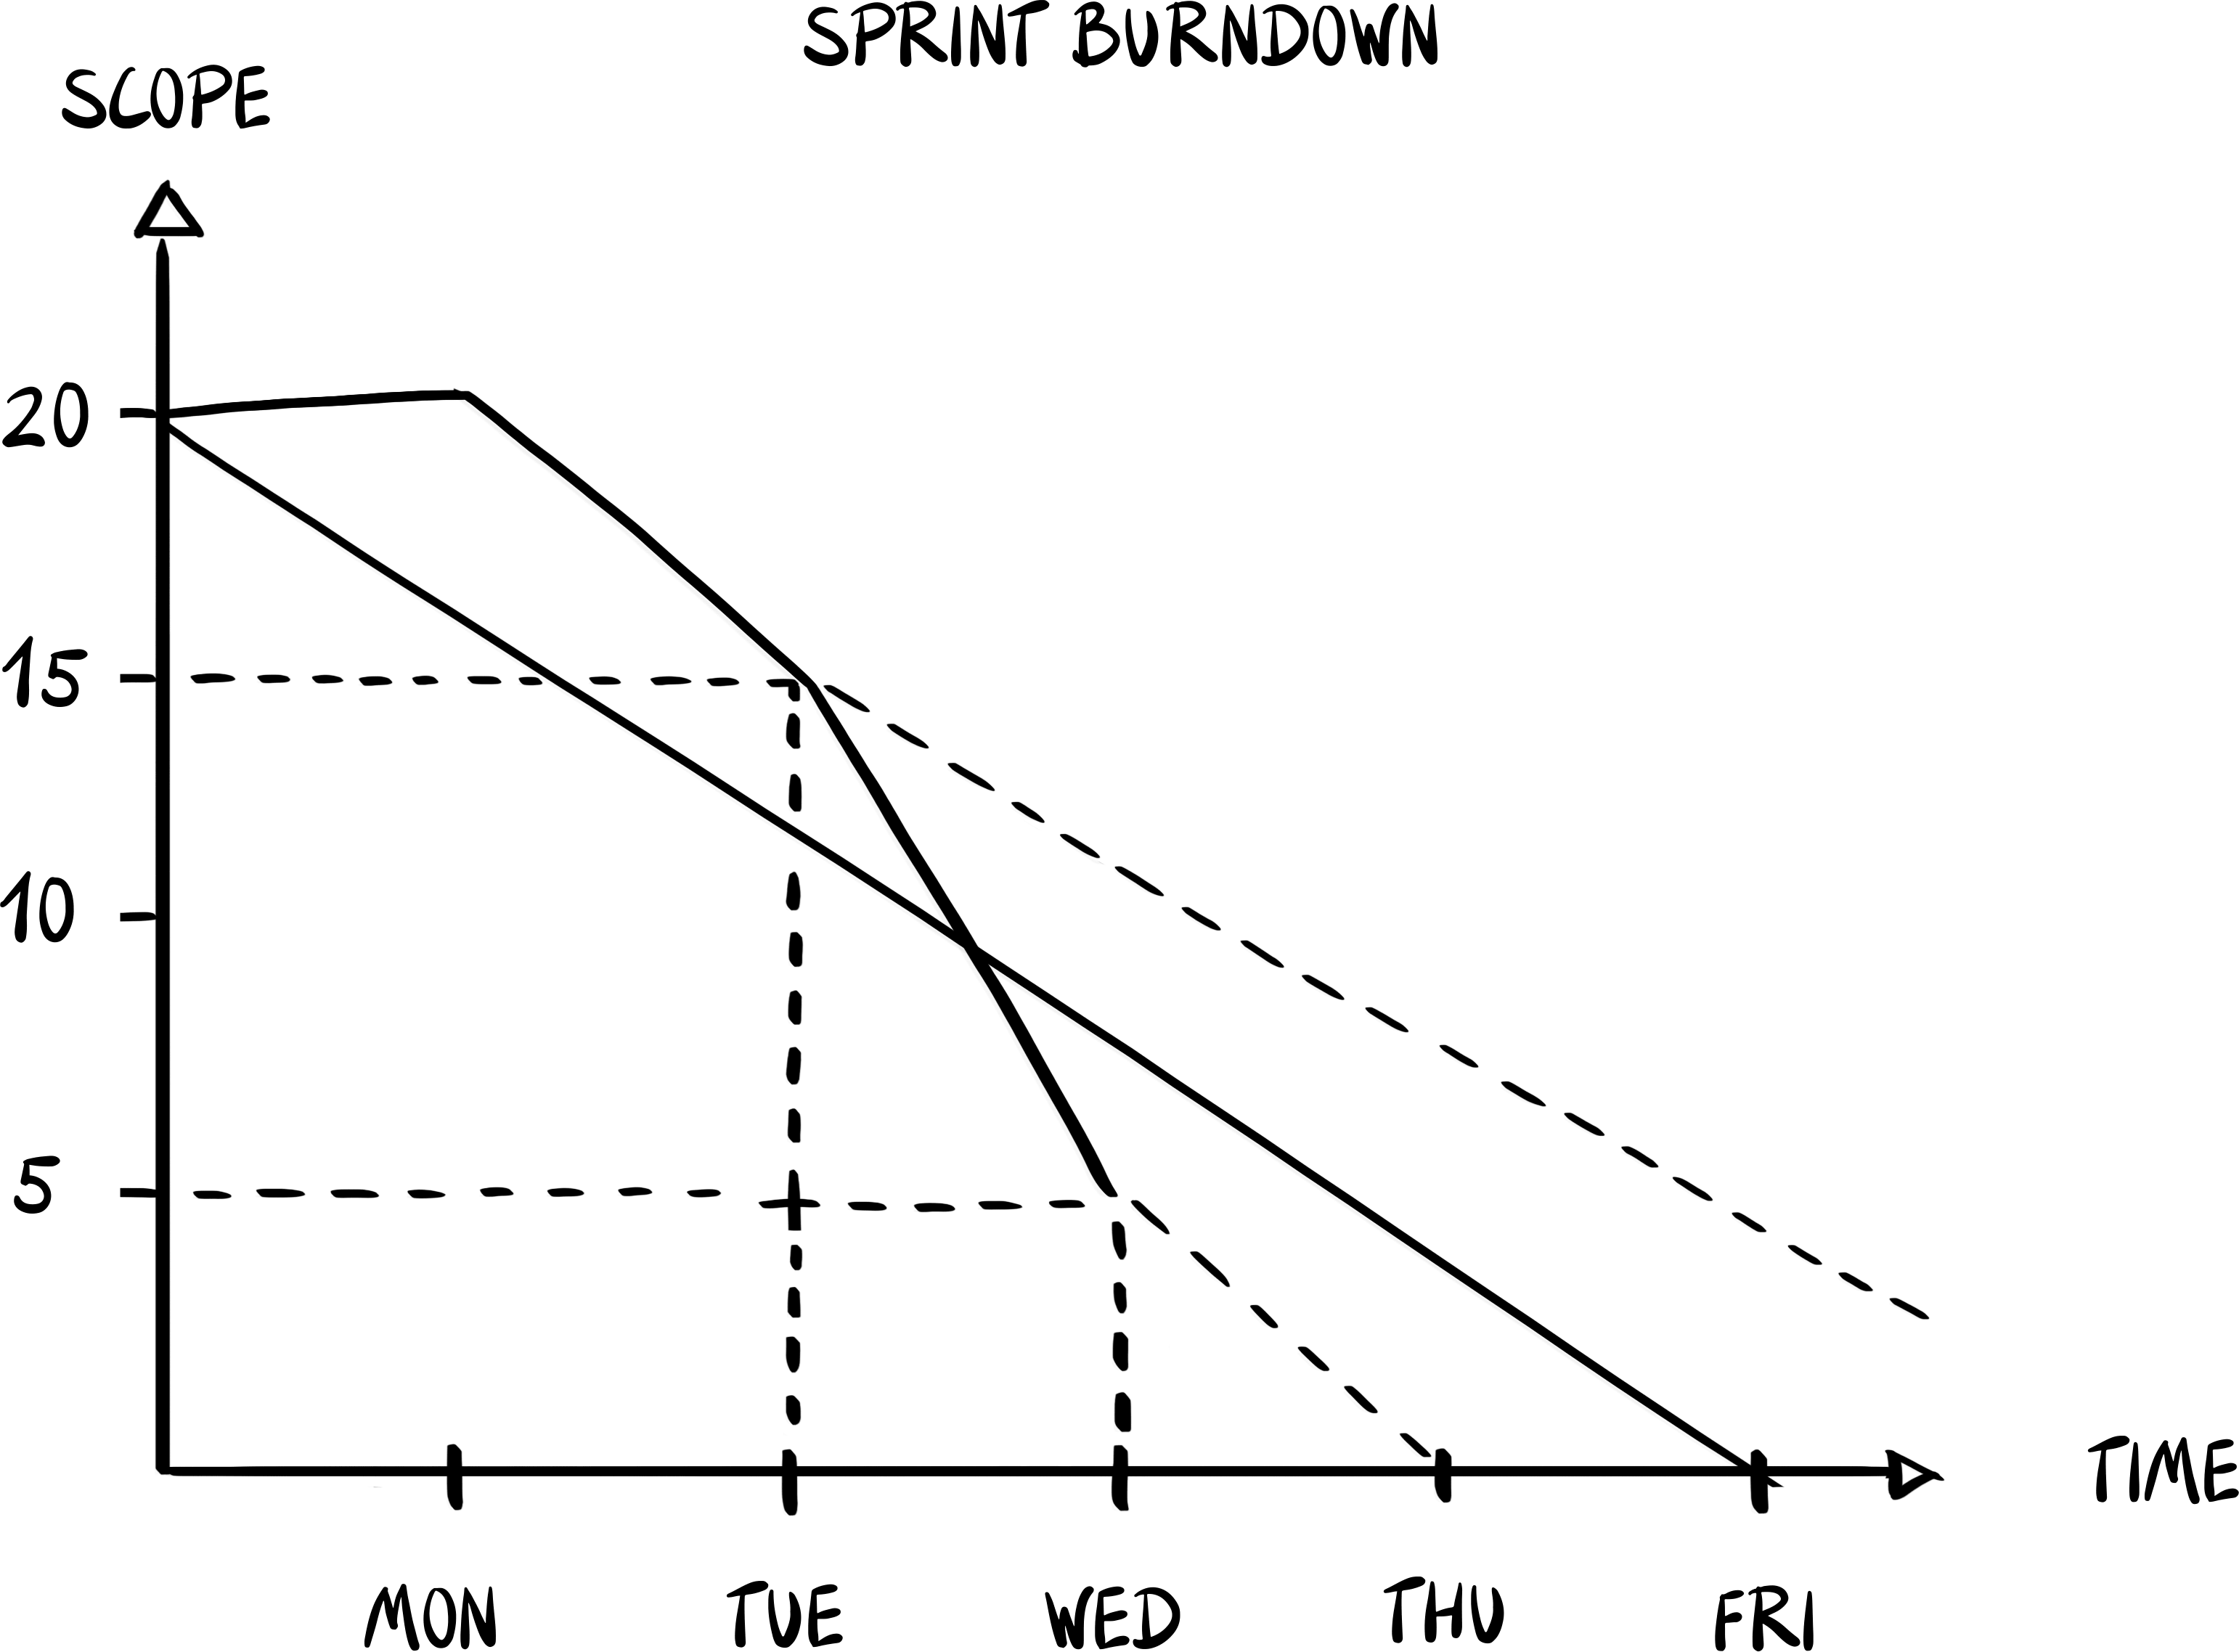 Sprint Burndown Chart